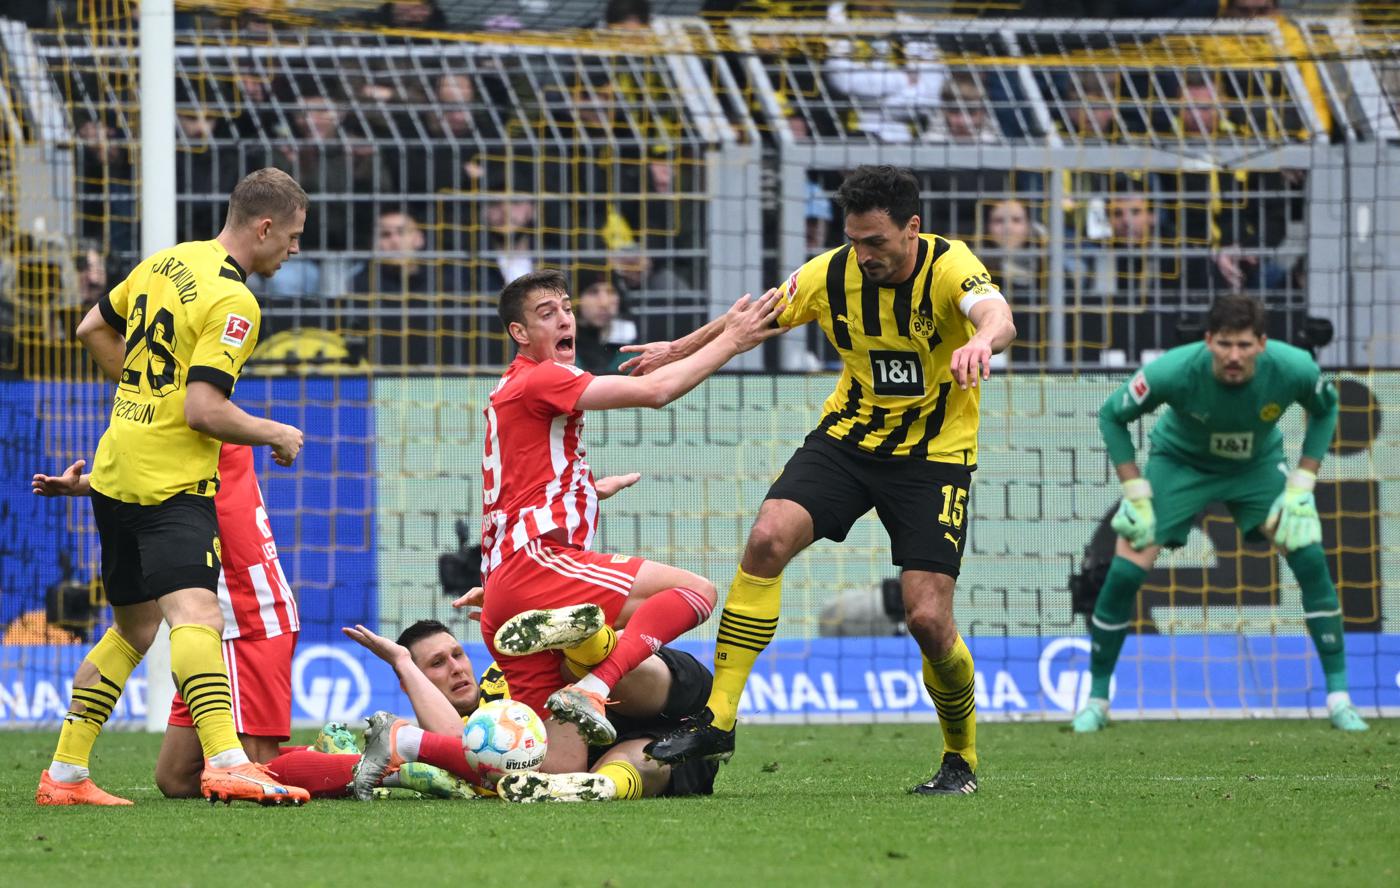 Borussia D - Union - 2-1. German Championship, round of 27. Match review, statistics.